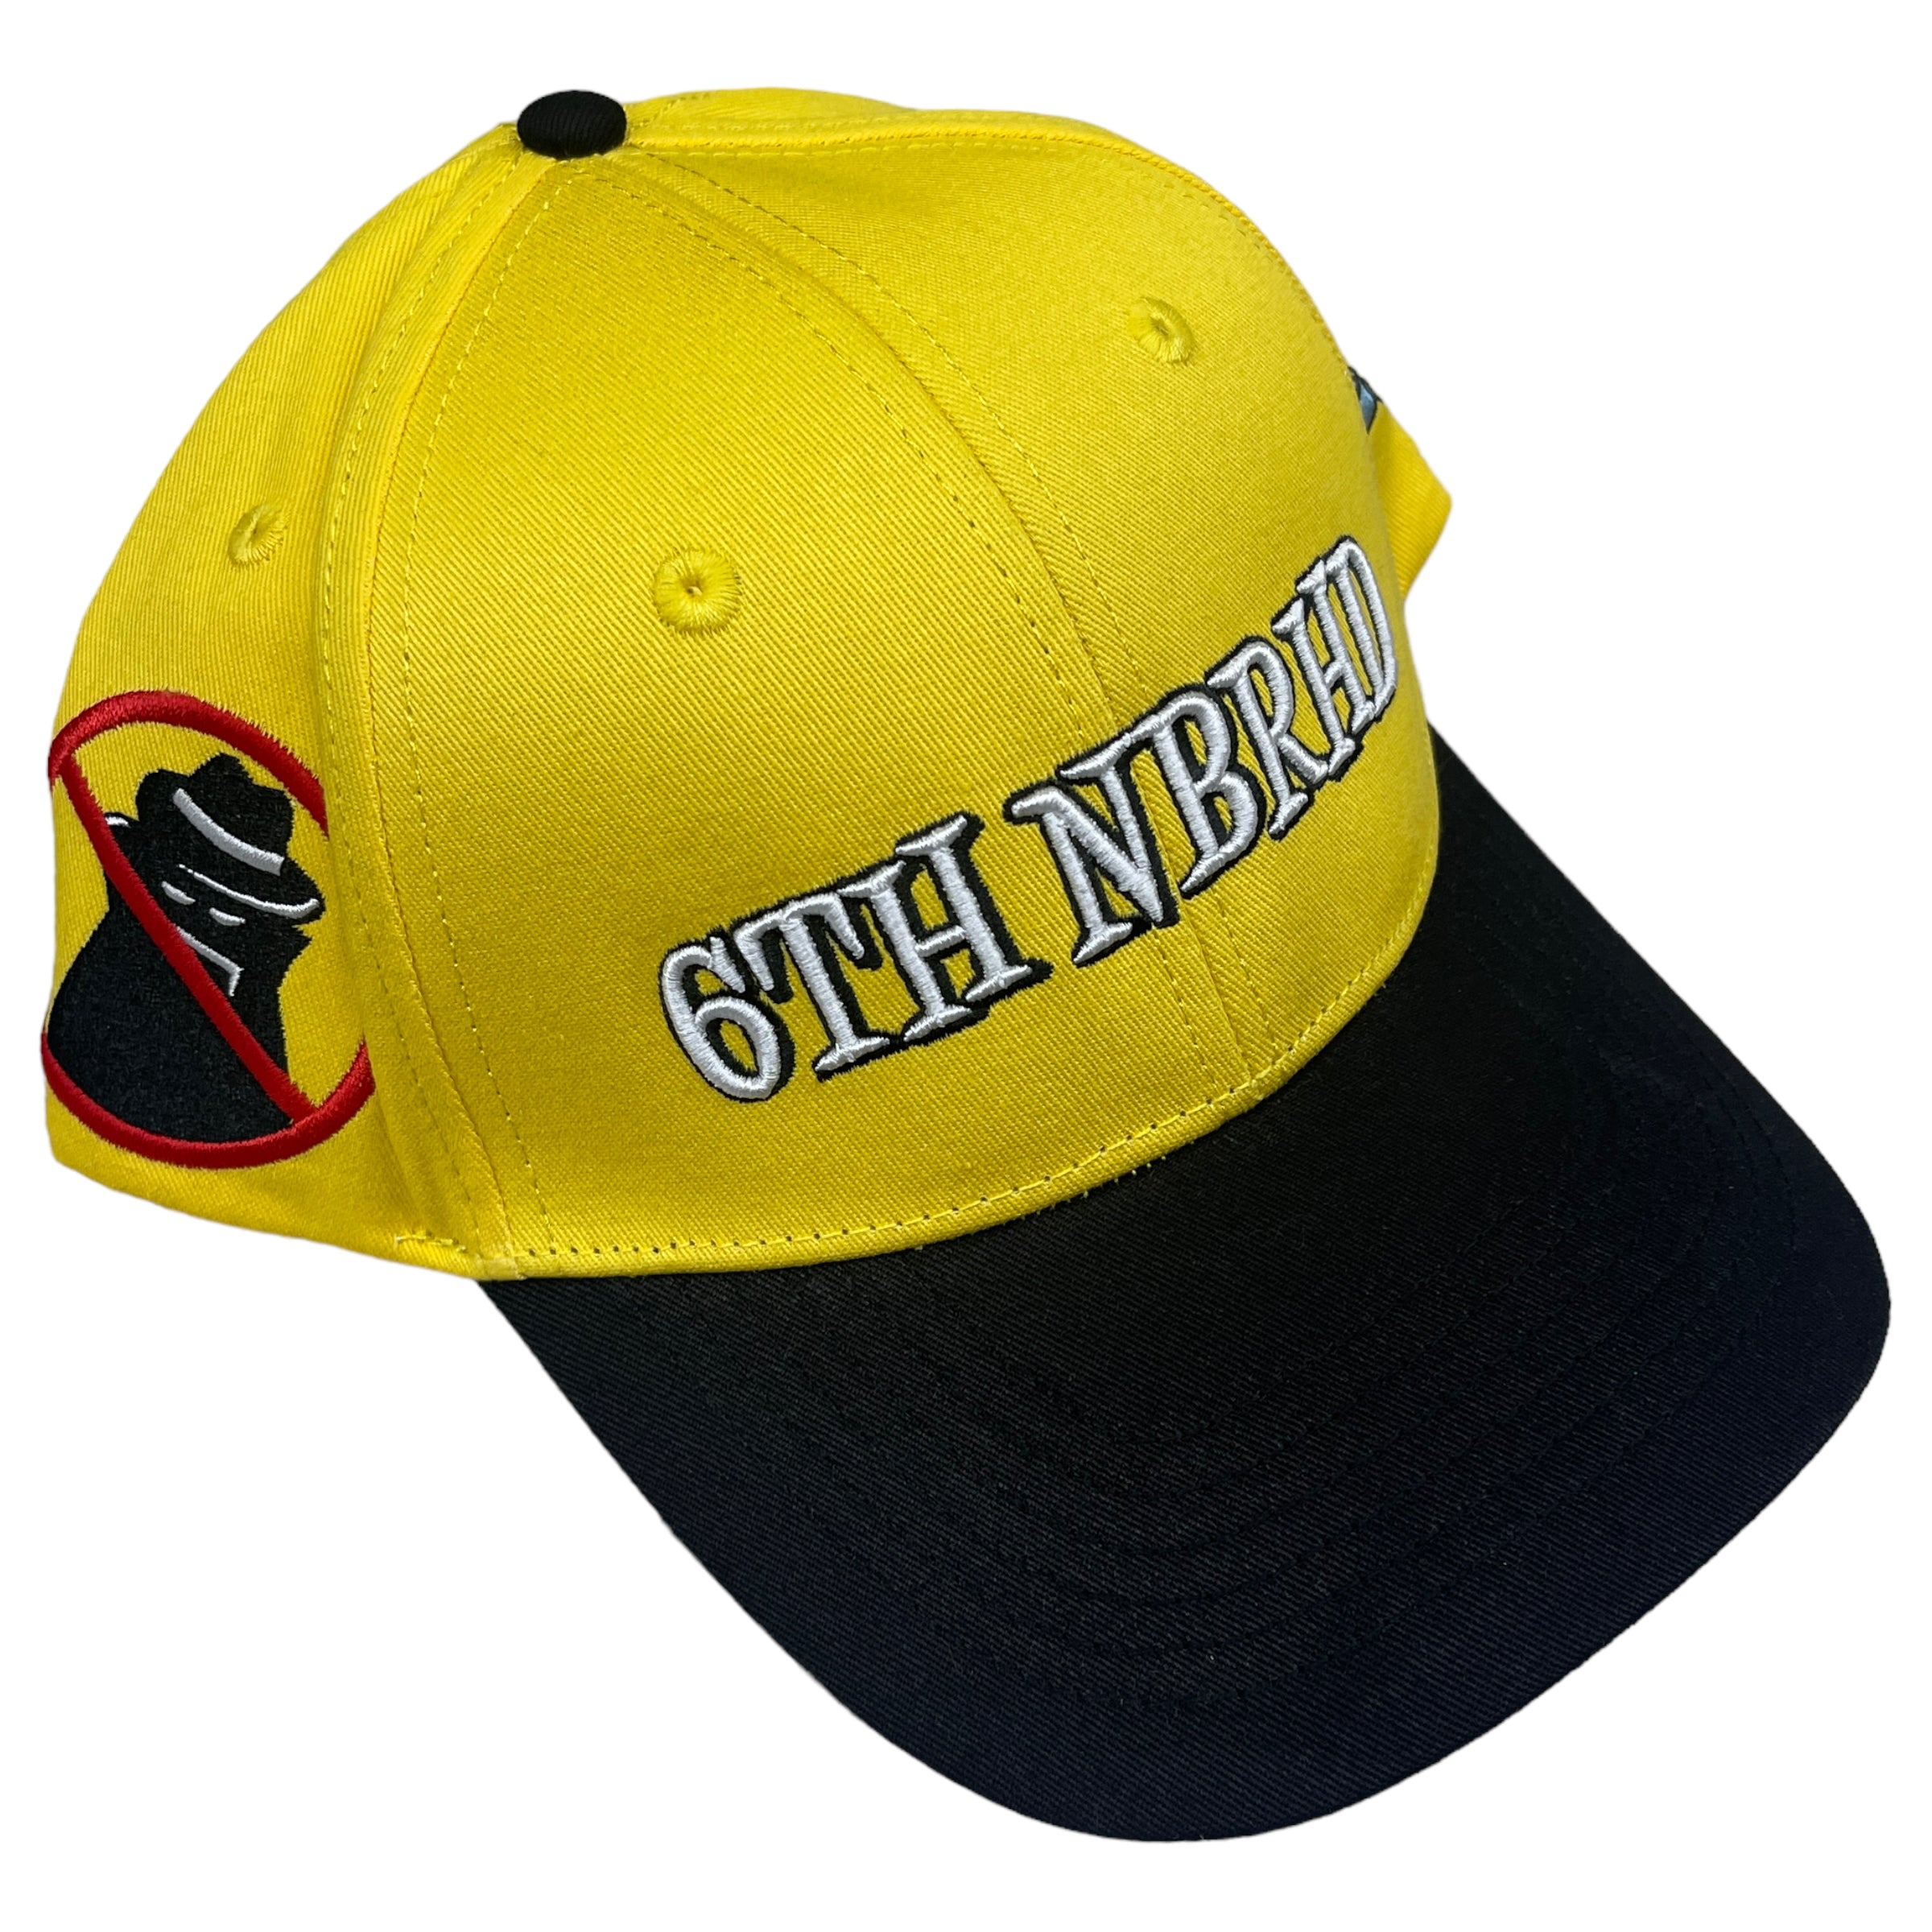 6TH NBRHD "Detective" Hat Yellow